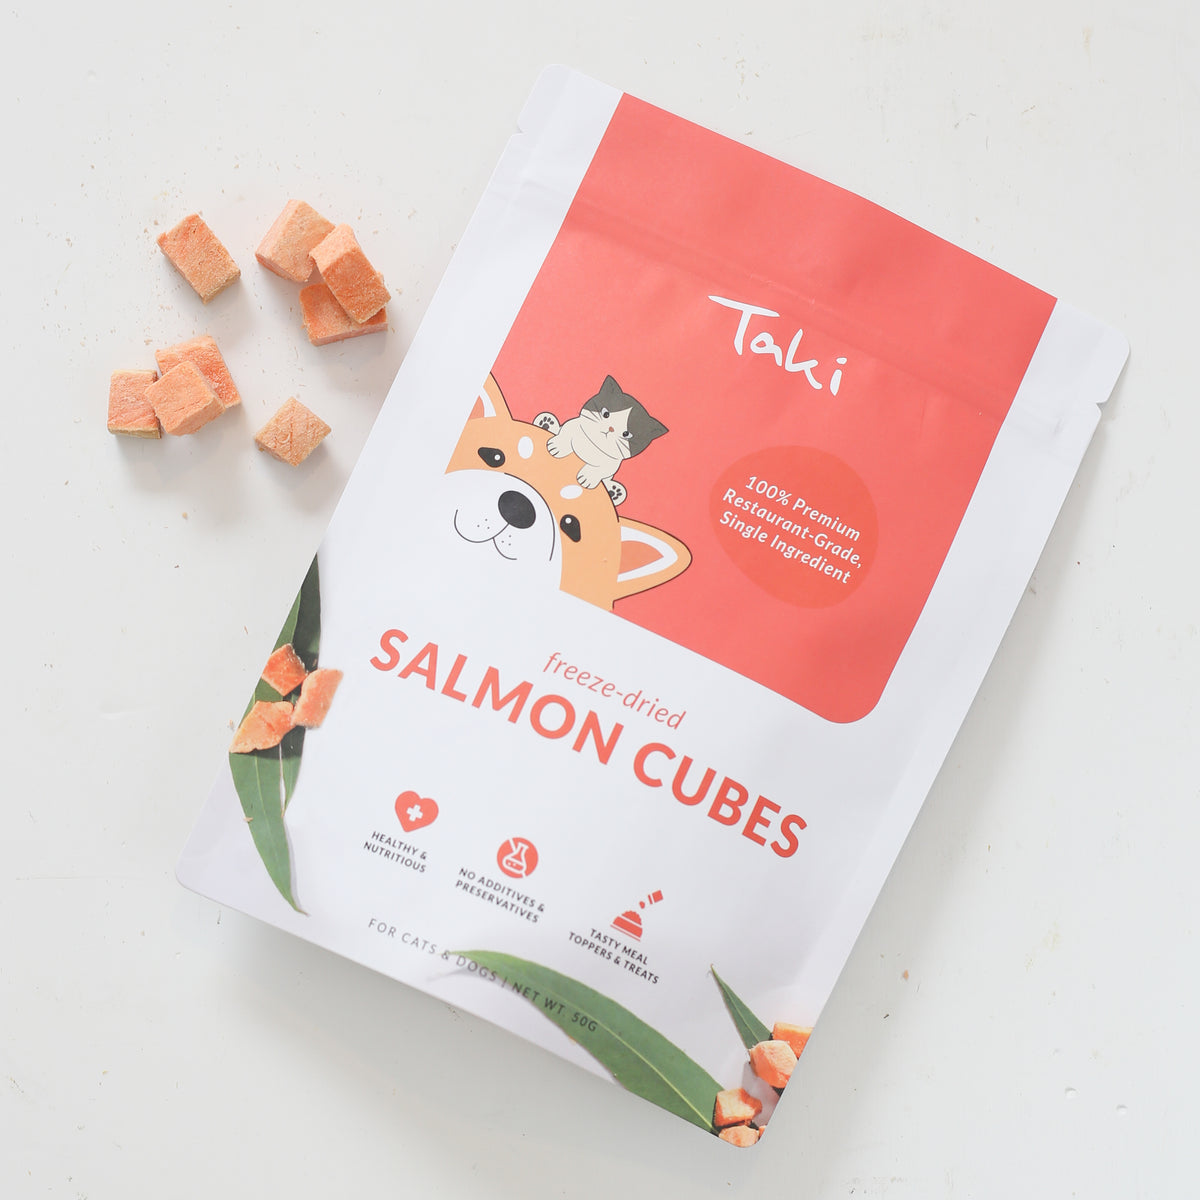 Salmon Cubes 50g